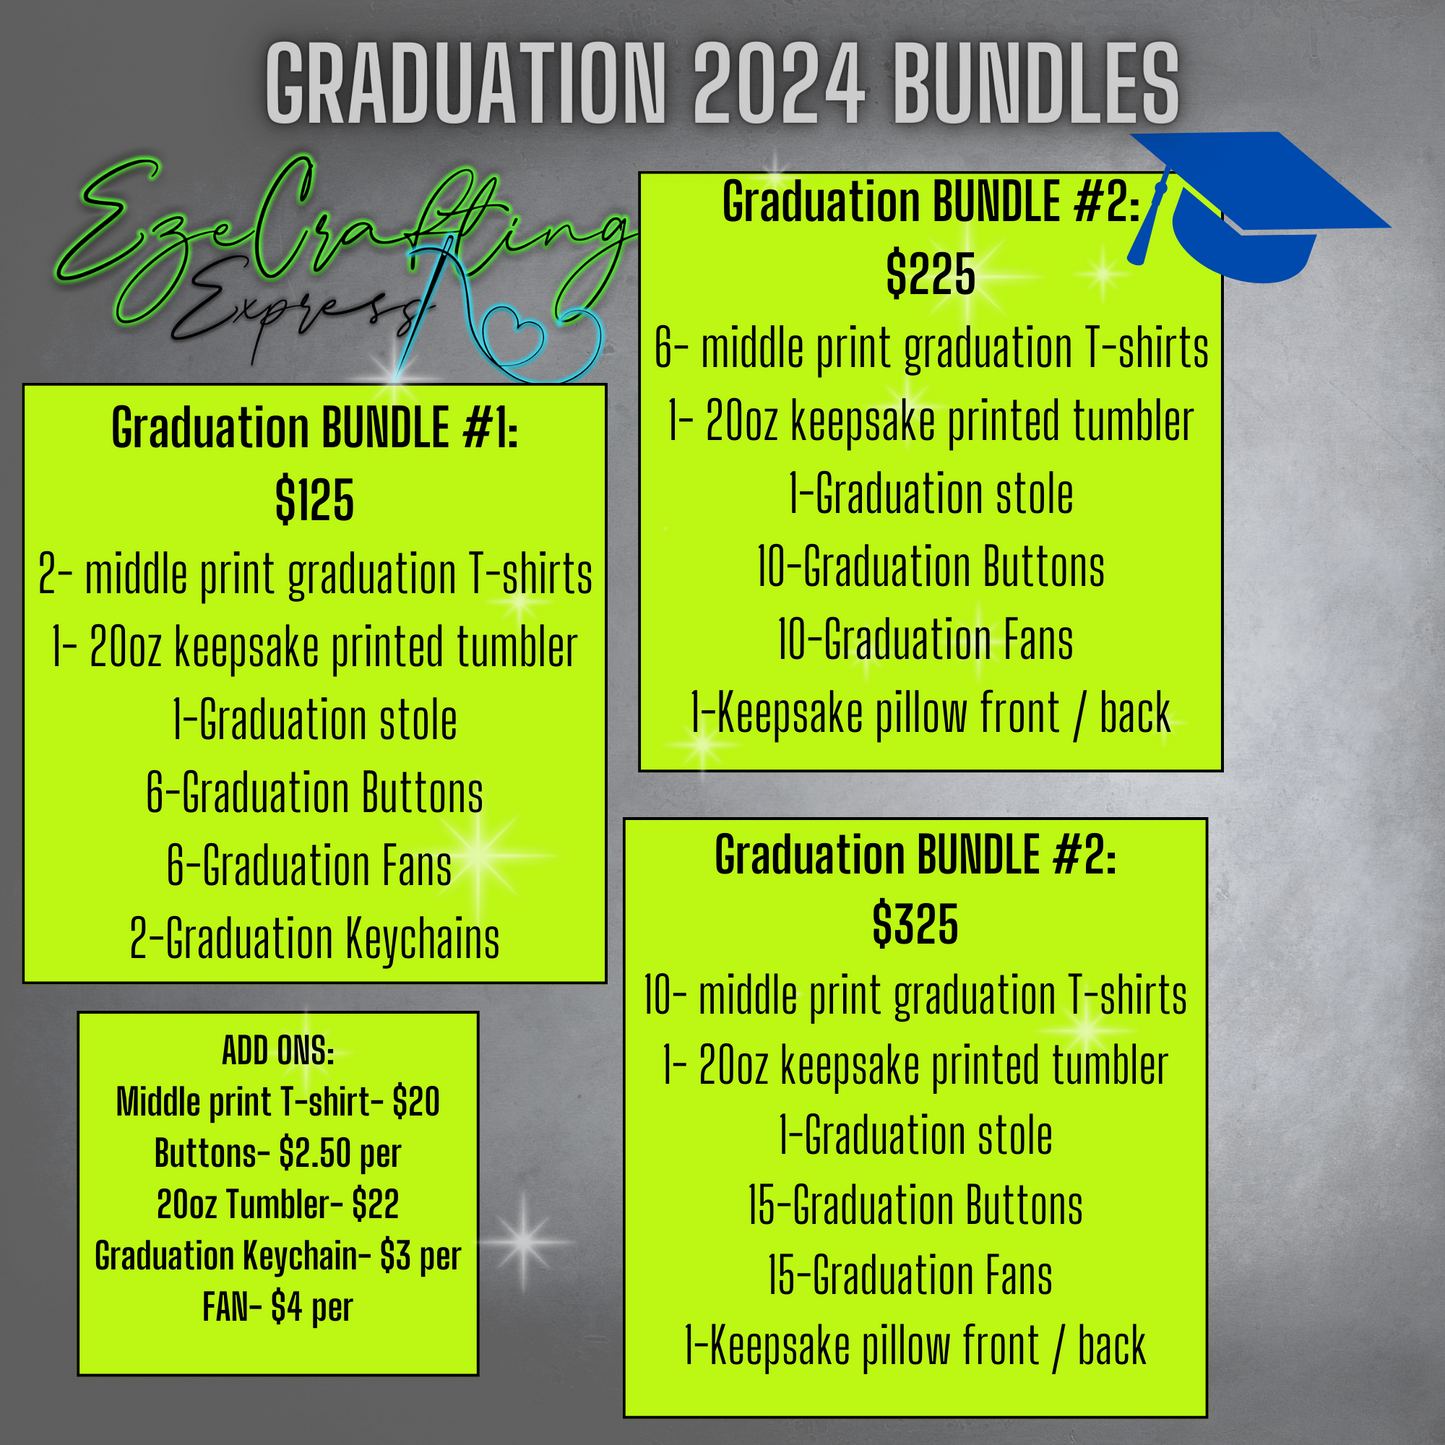 Graduation Bundles 2024